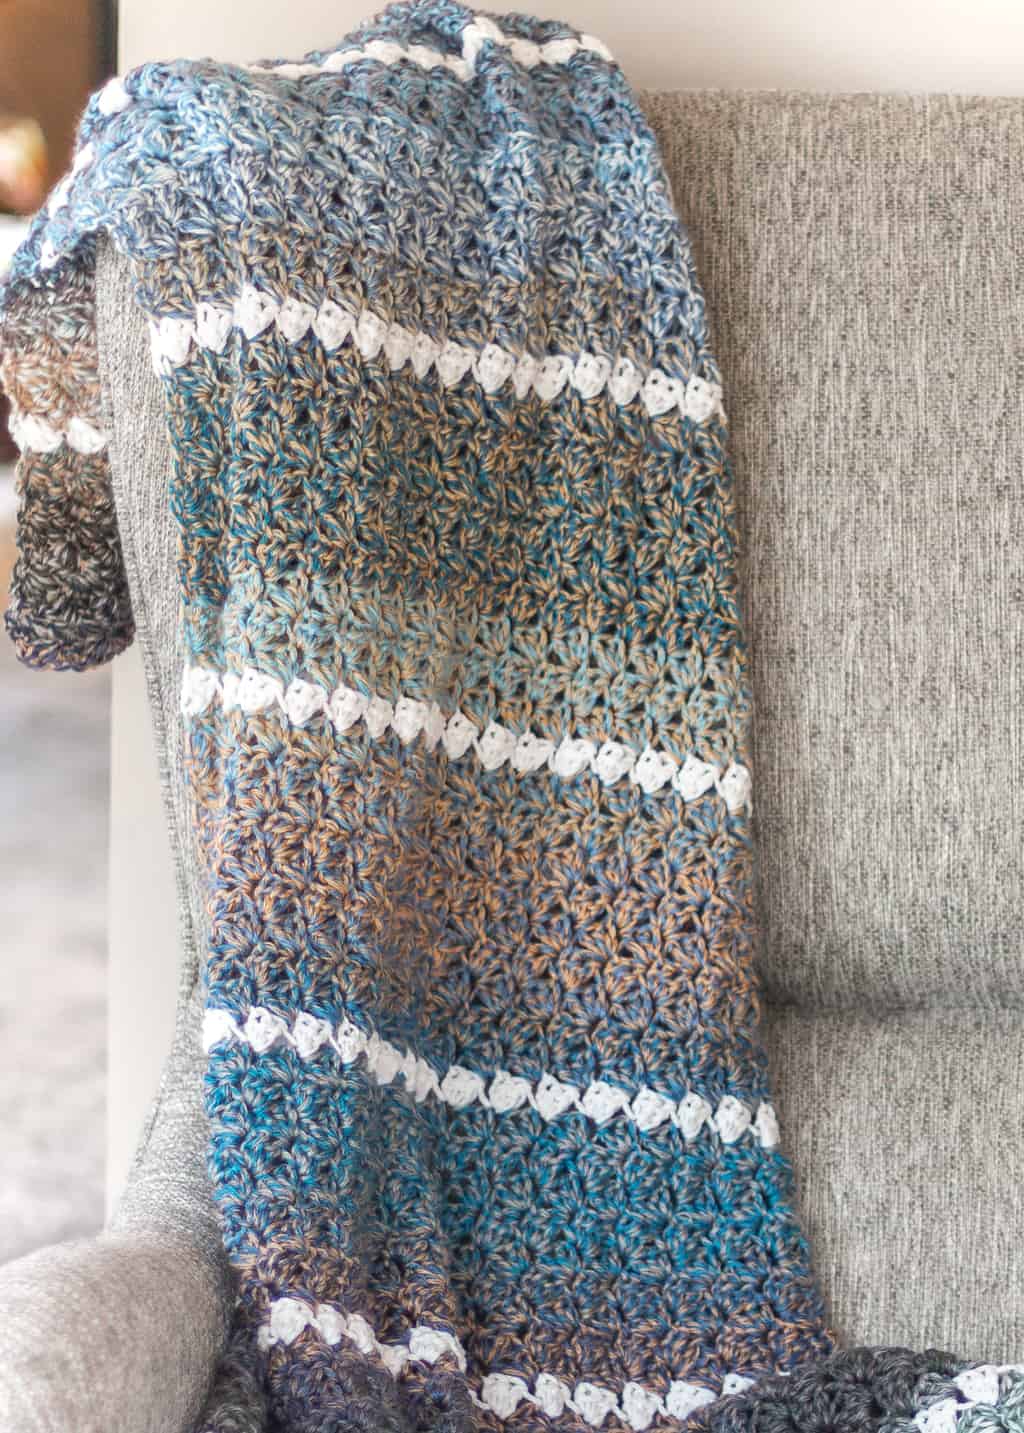 Easy Crochet Lap Blanket